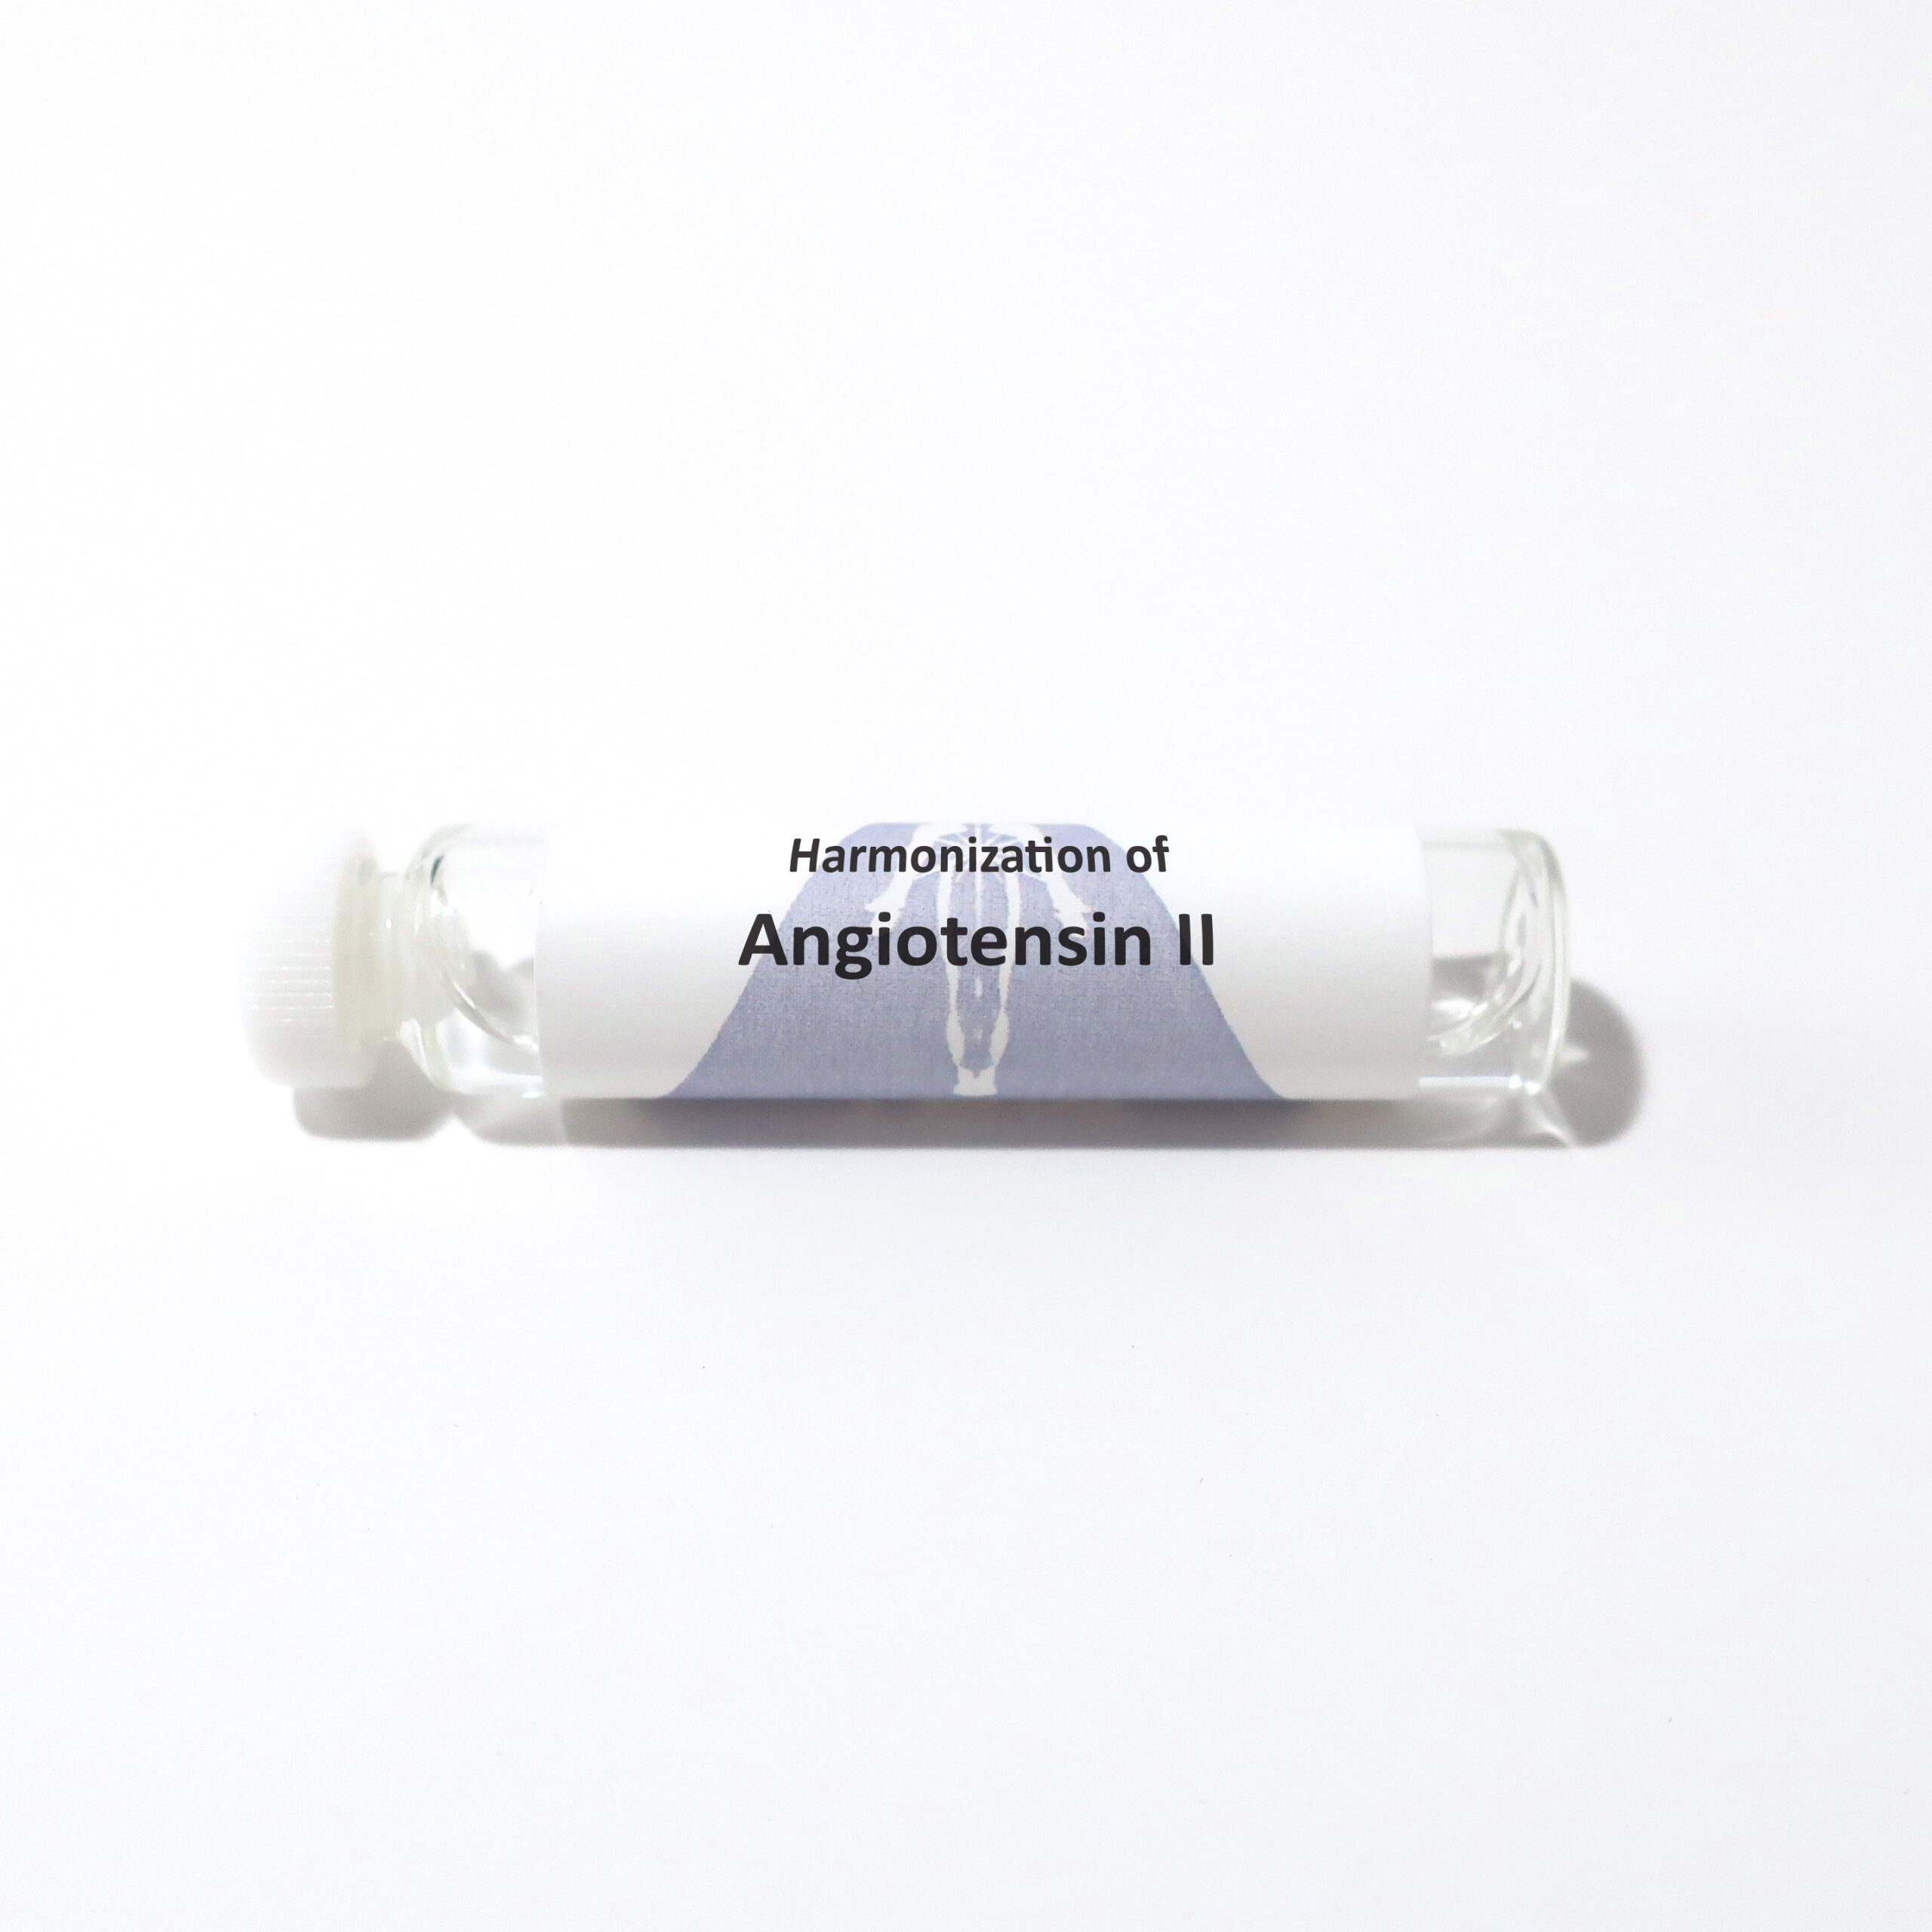 Angiotensin II